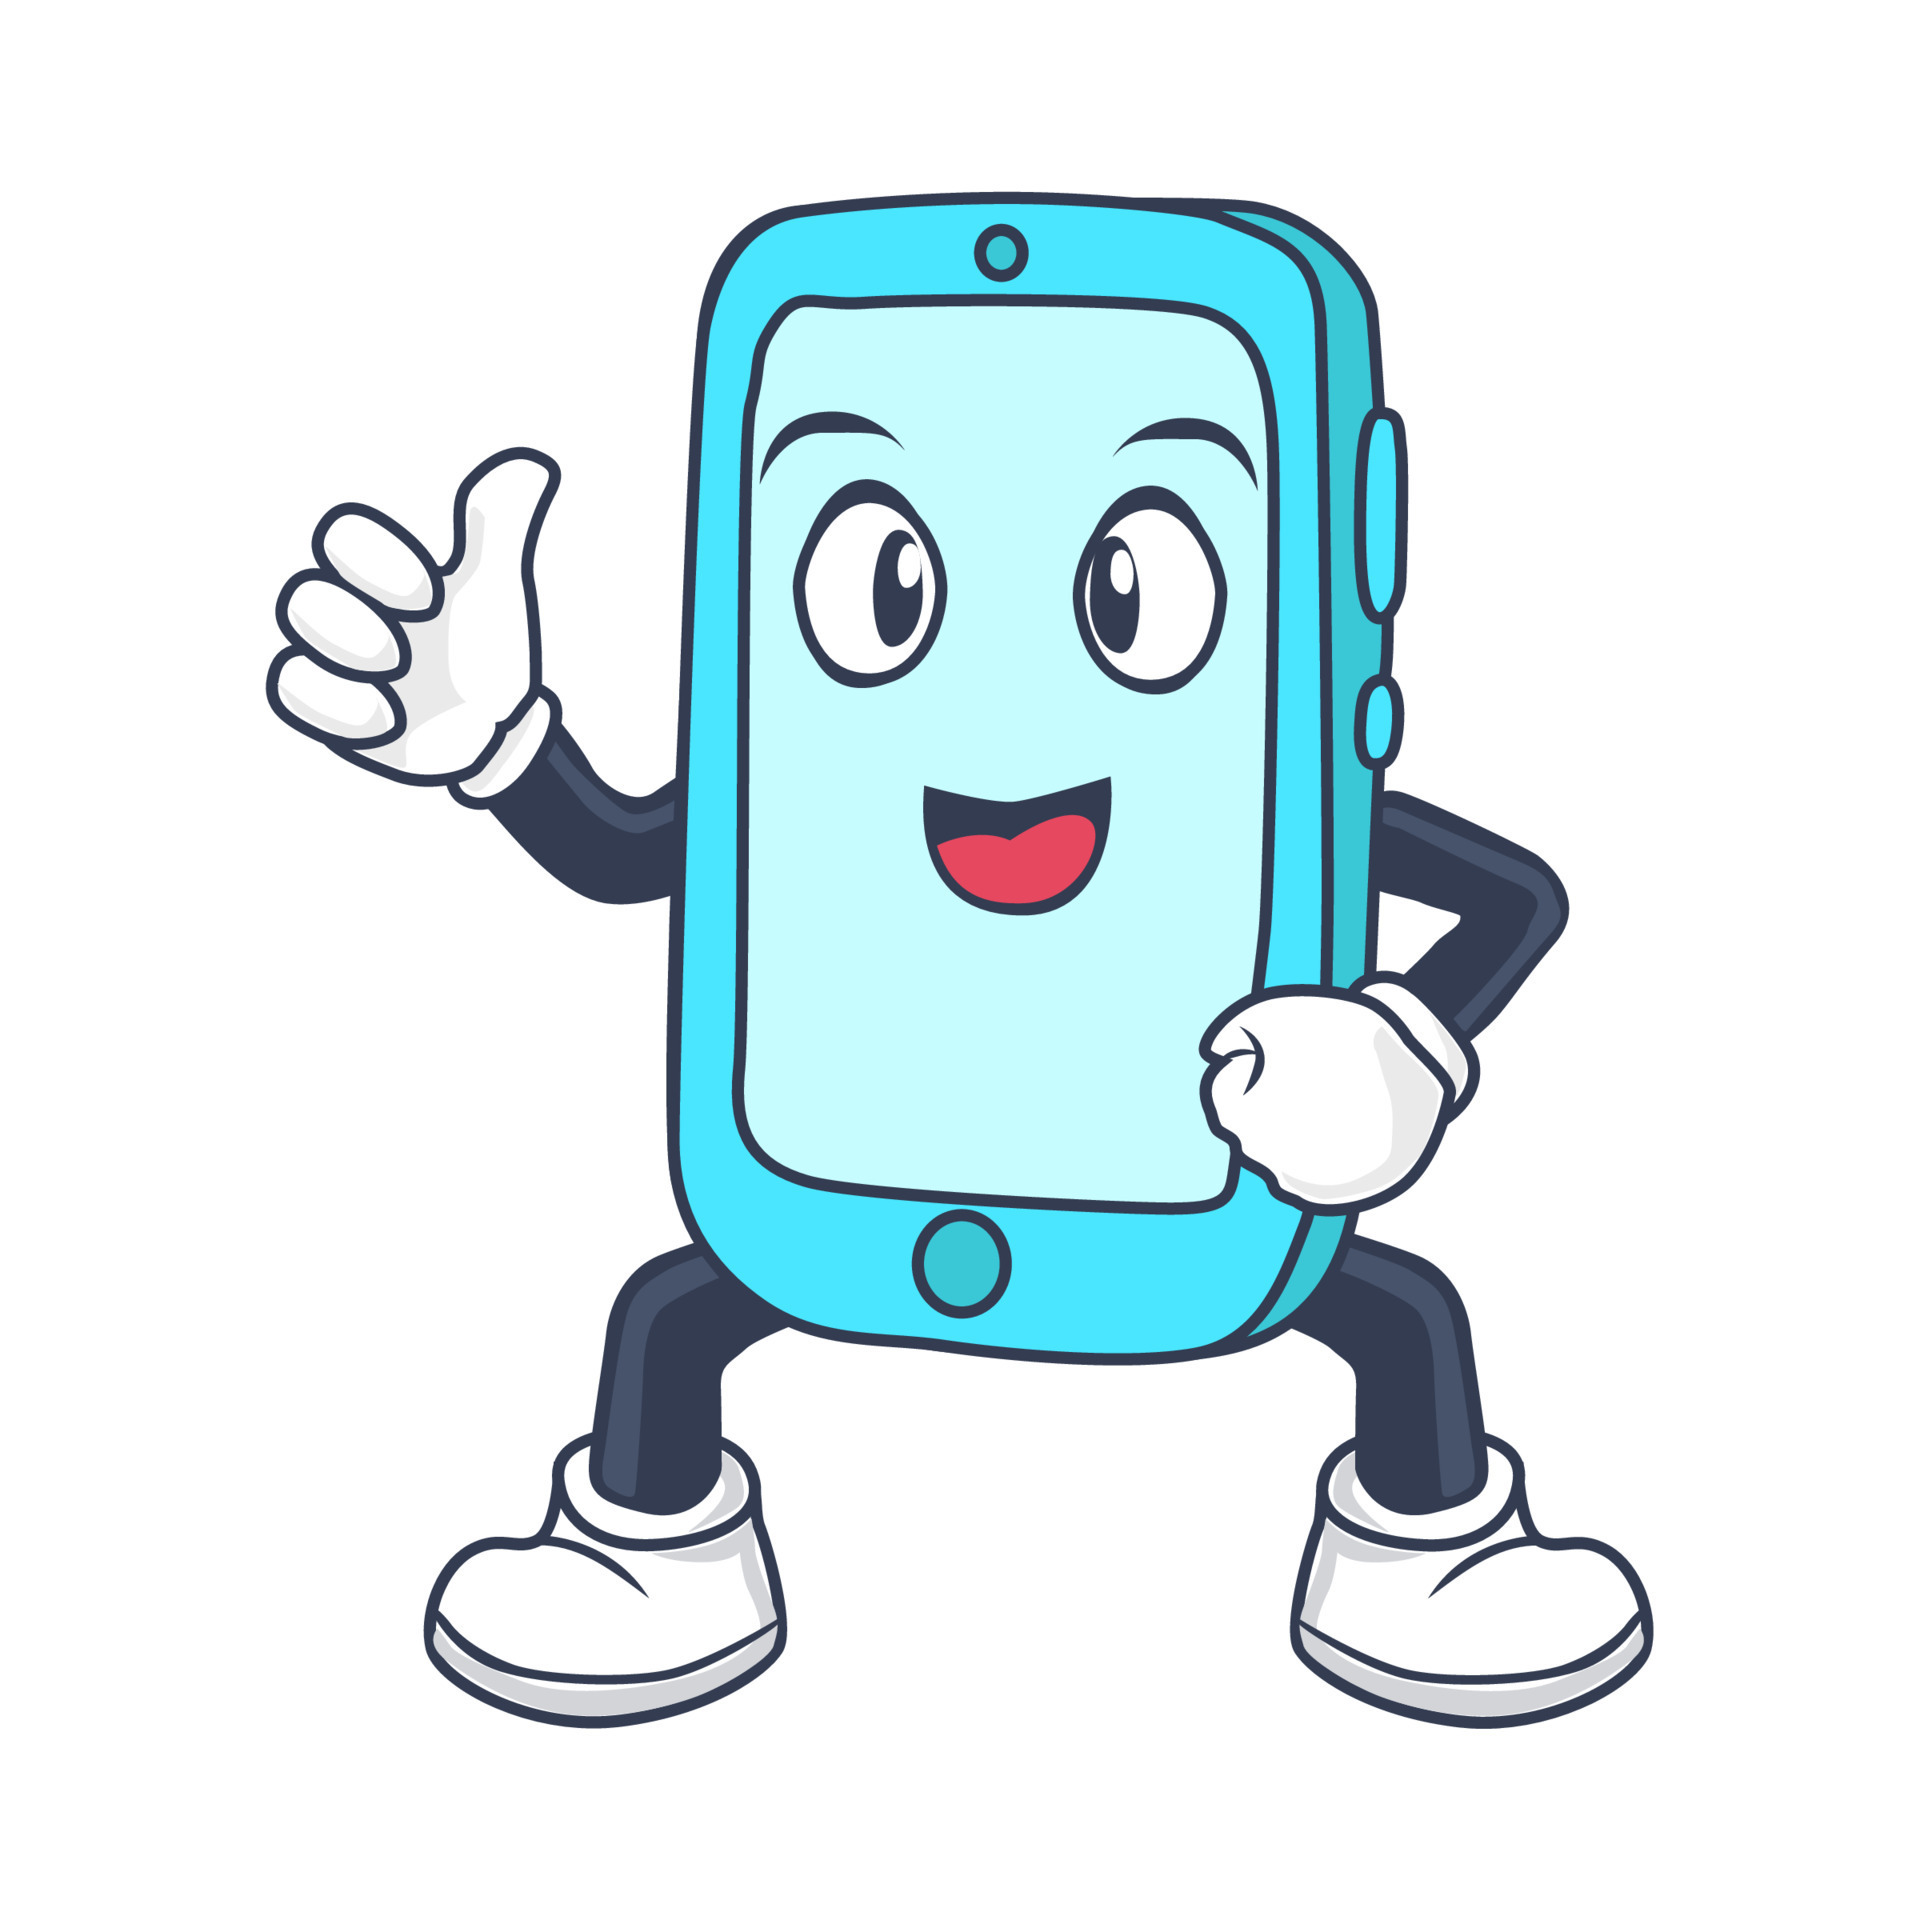 Smart Phone Mascot Vector Illustration For Phone Shop And Repair ...